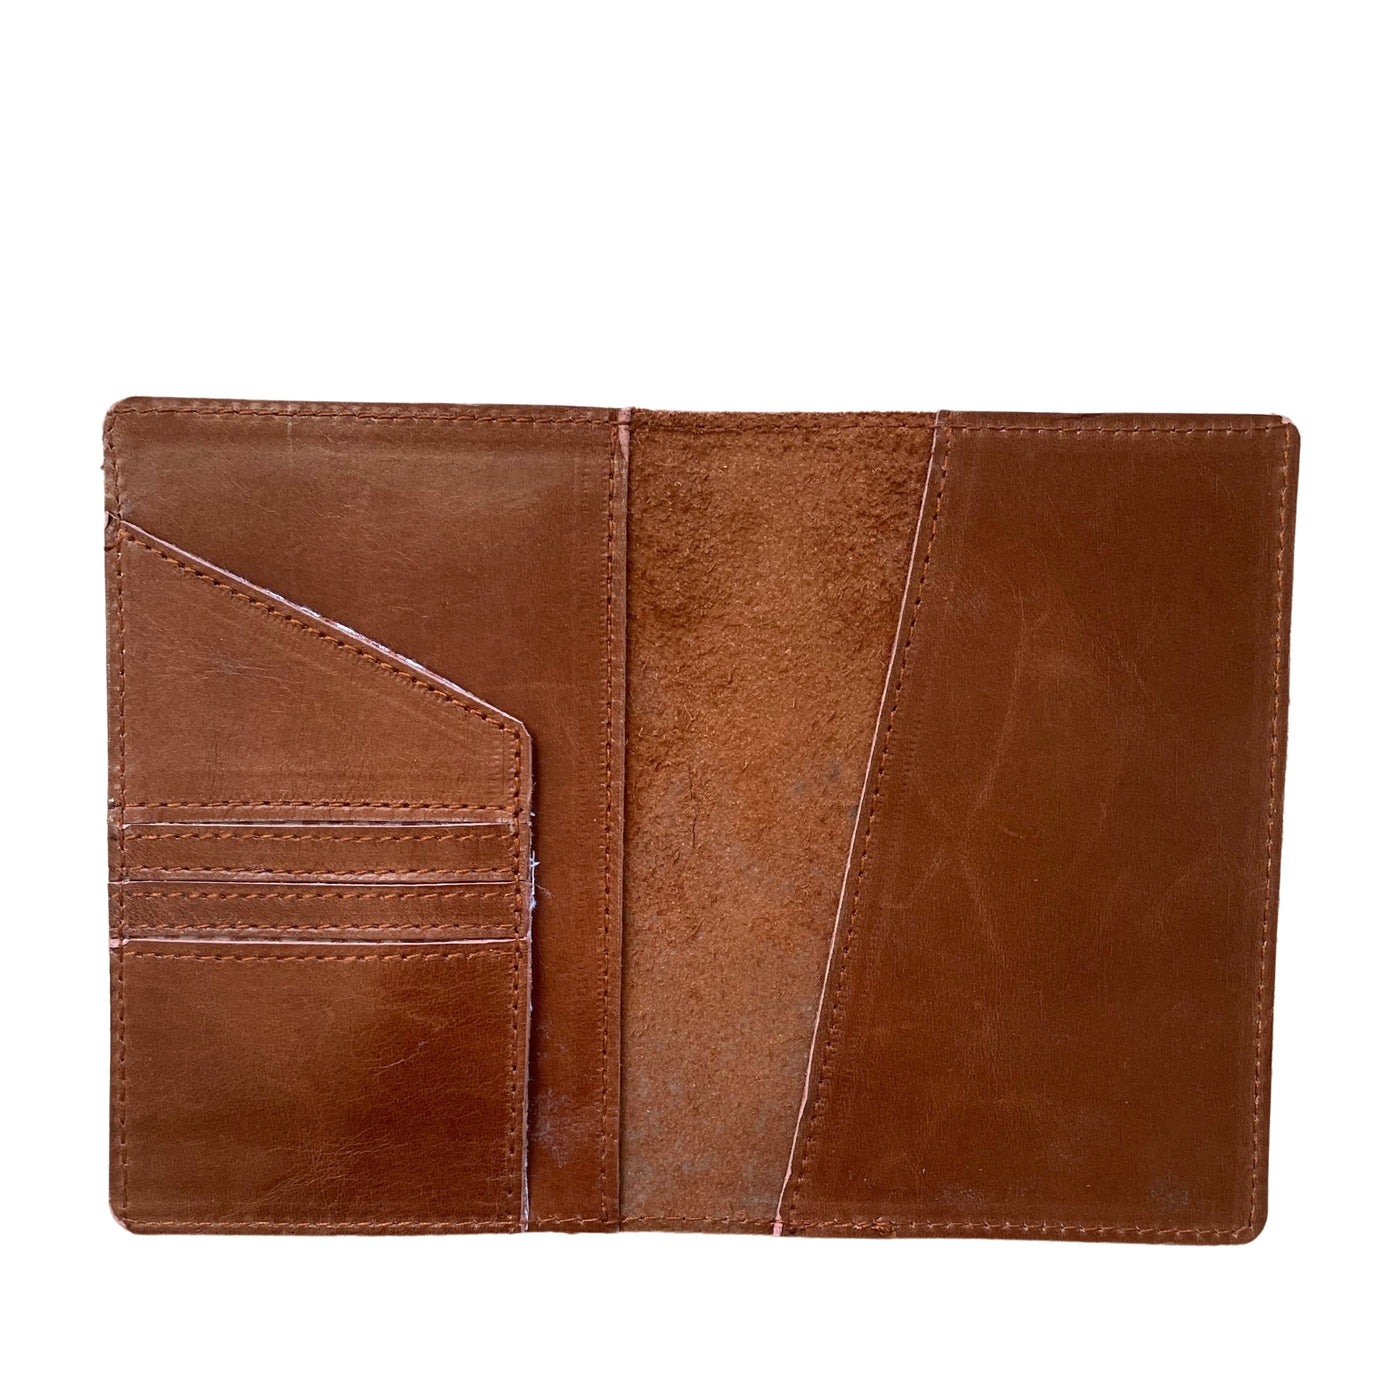 Mahogany Leather Passport Wallet